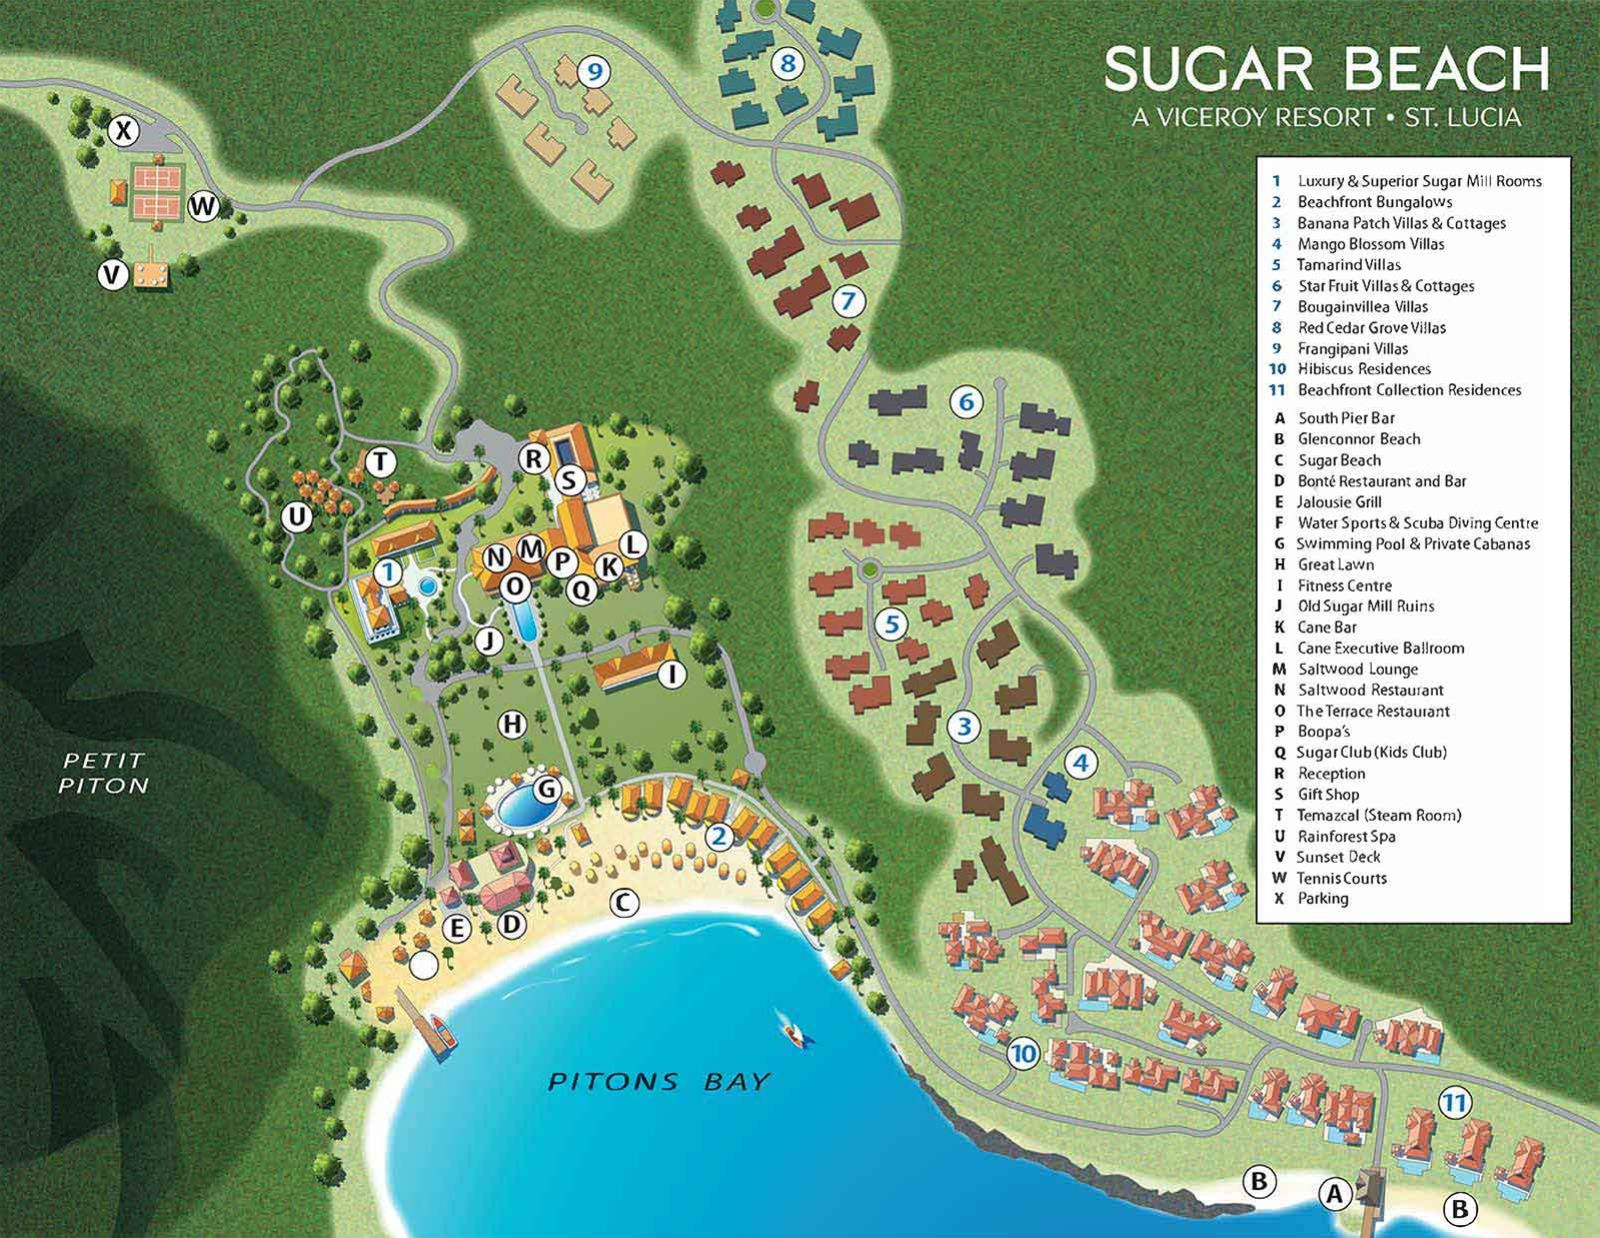 Map of Sugar Beach, A Viceroy Resort